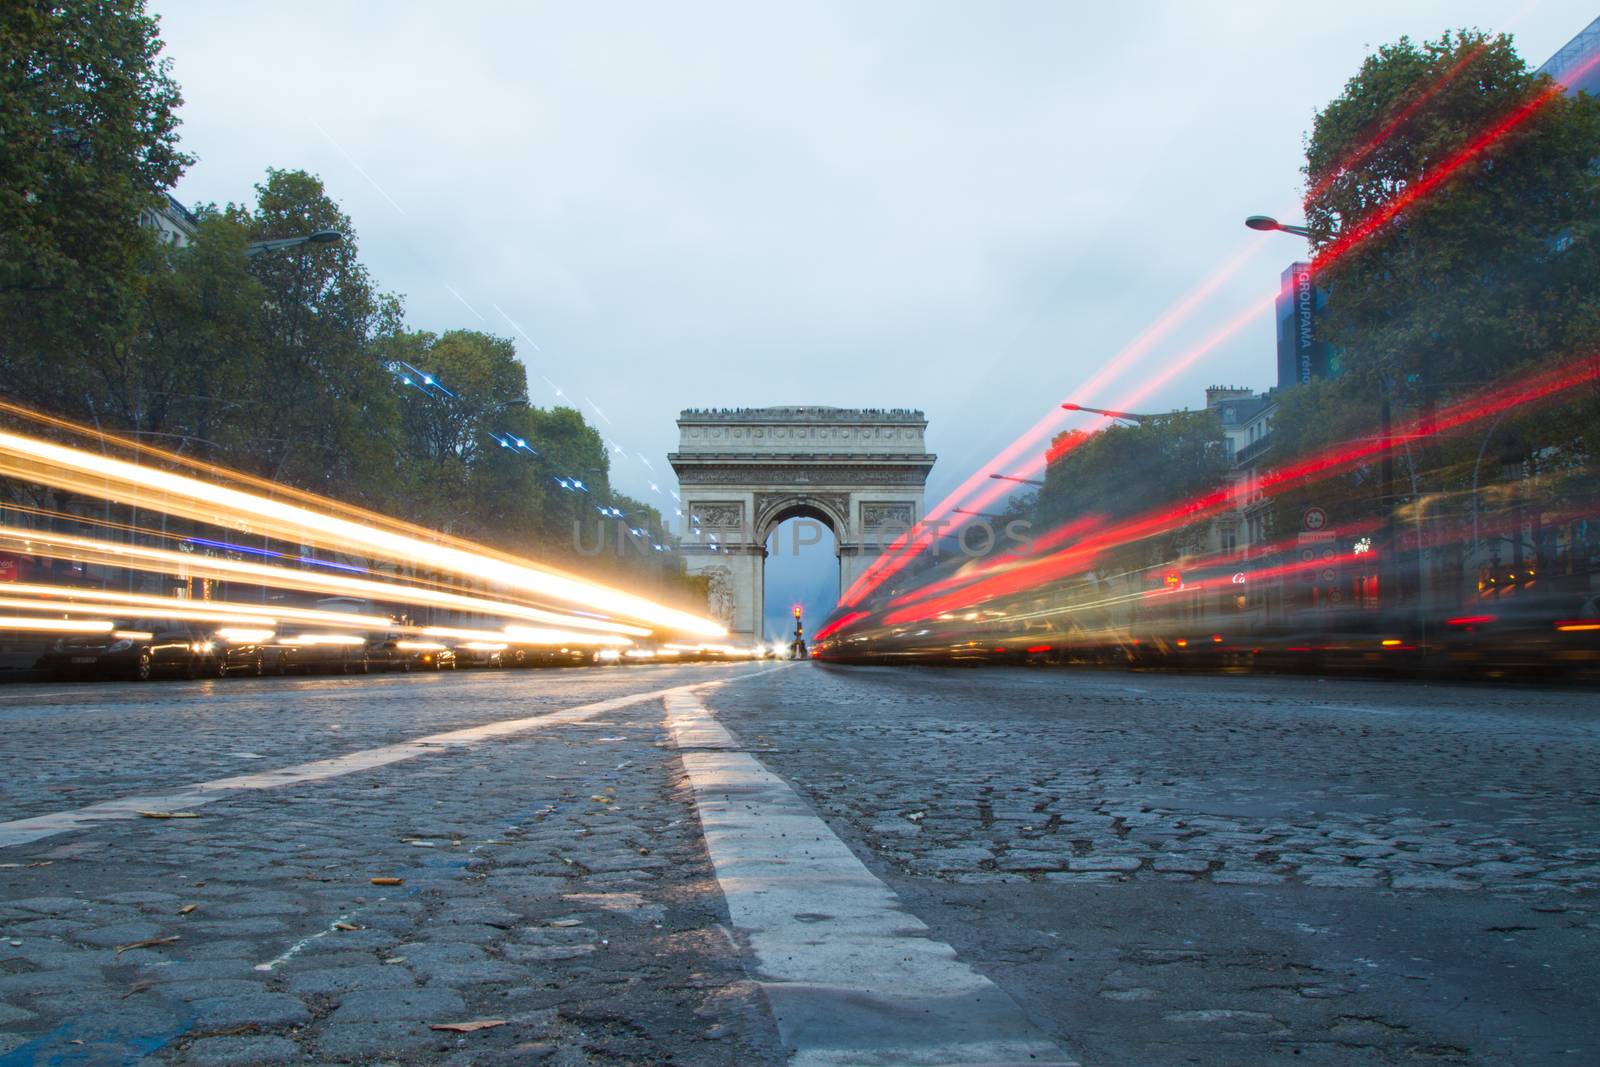 L'Arc de Triomphe in Paris by samULvisuals